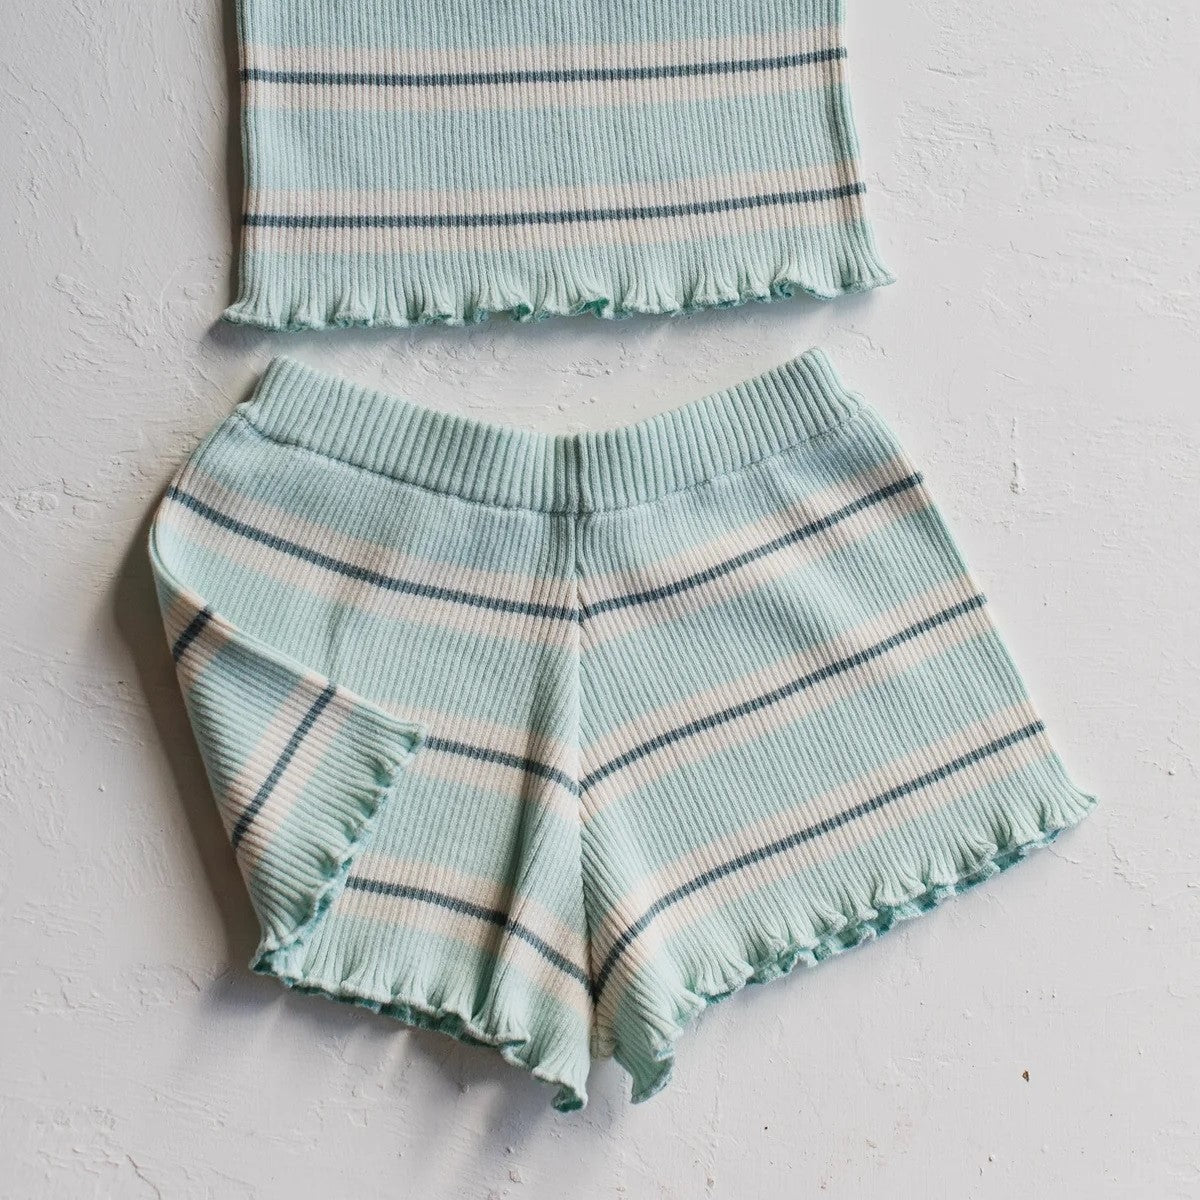 RAISED BY WATER Kealia Knit Set Striped Aqua ALWAYS SHOW